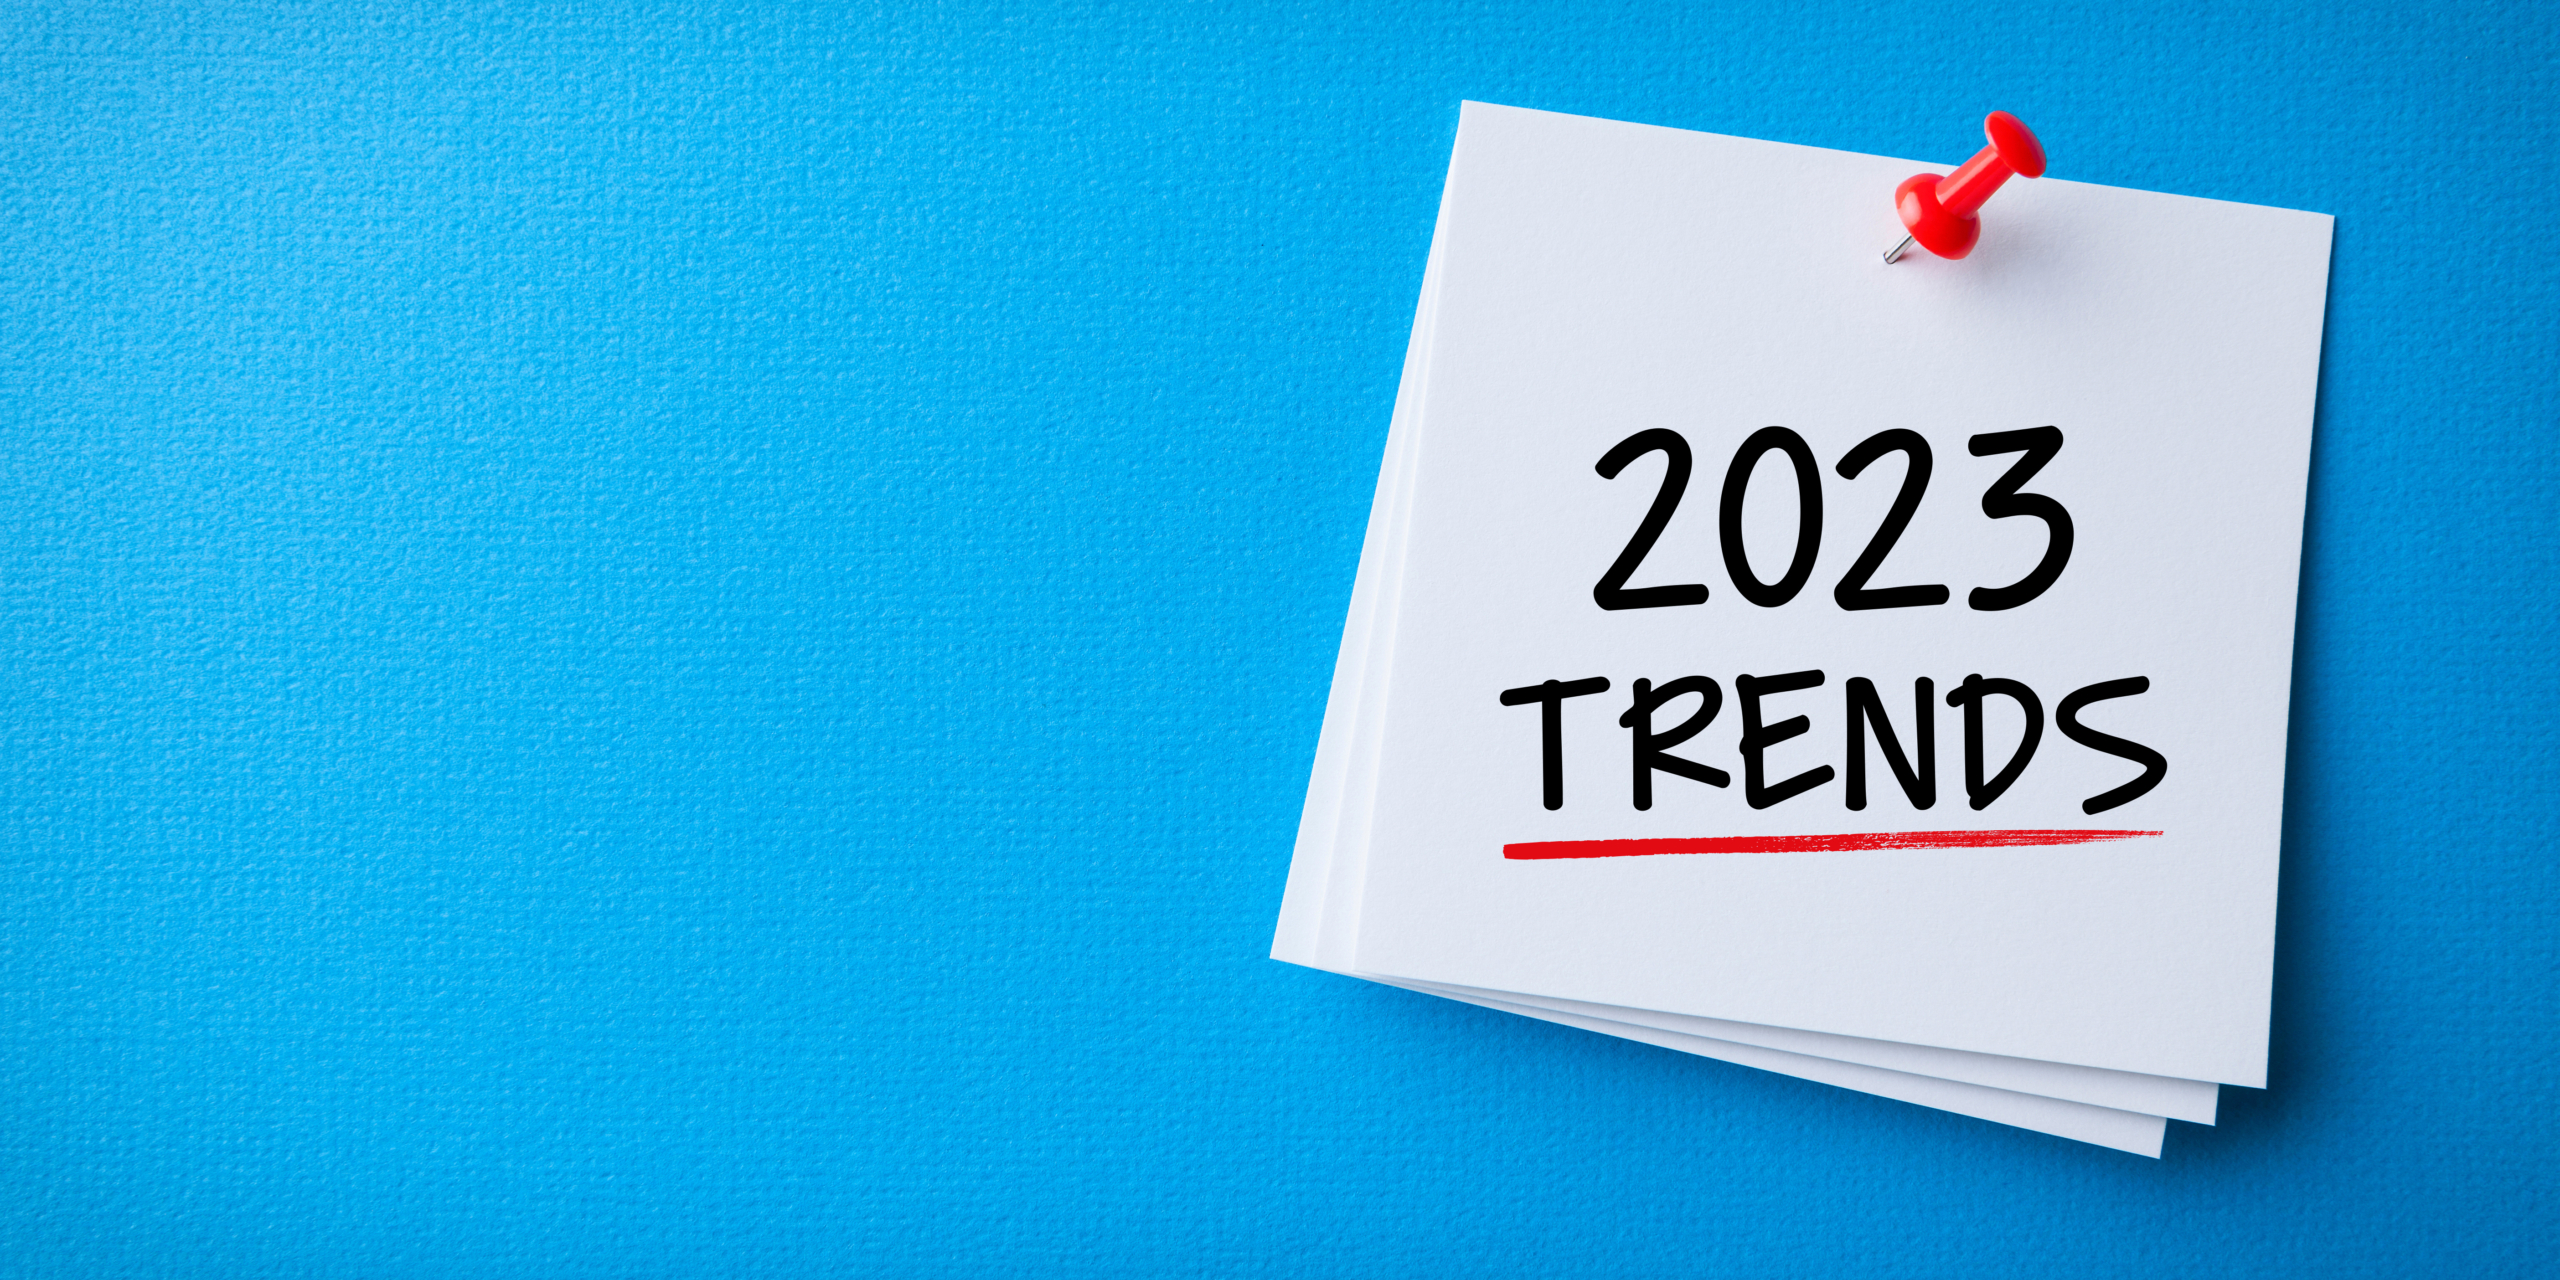 Social-Media-Trends für 2023: Vertriebspush im B2B